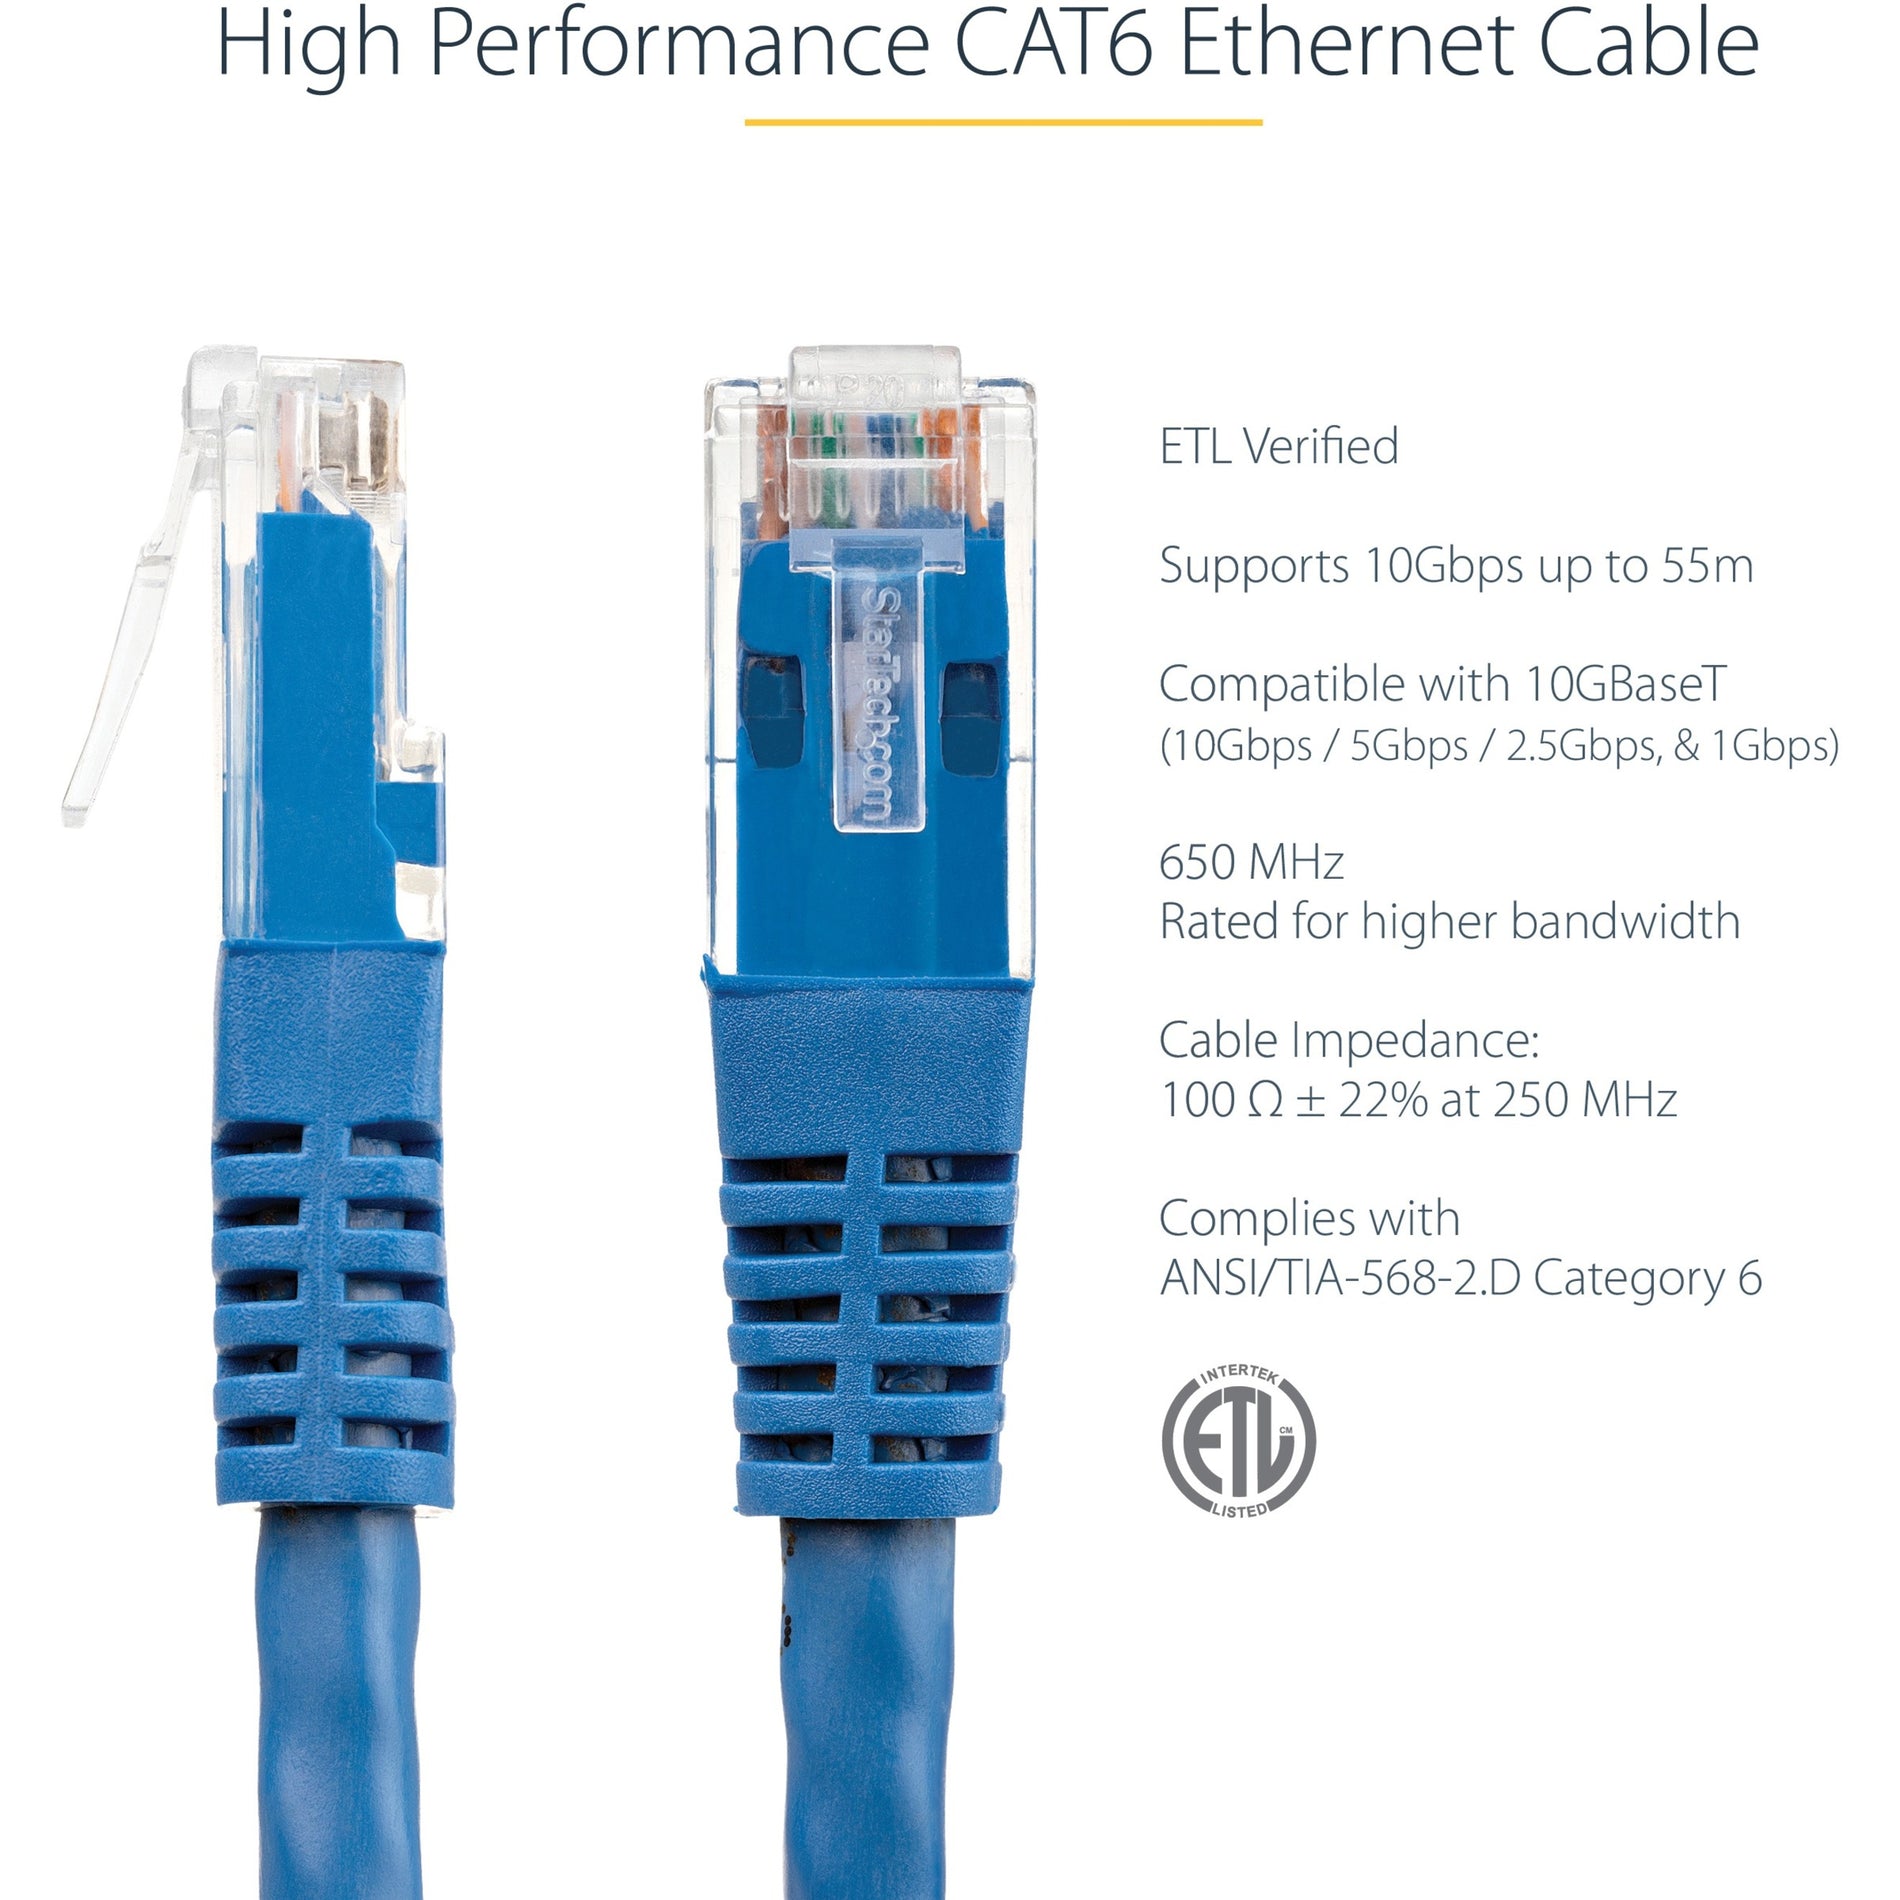 Marca: StarTech.com Cable de conexión UTP Cat6 moldeado azul de 6 pies ETL verificado velocidad de transferencia de datos de 10 Gbit/s arranque sin enganches